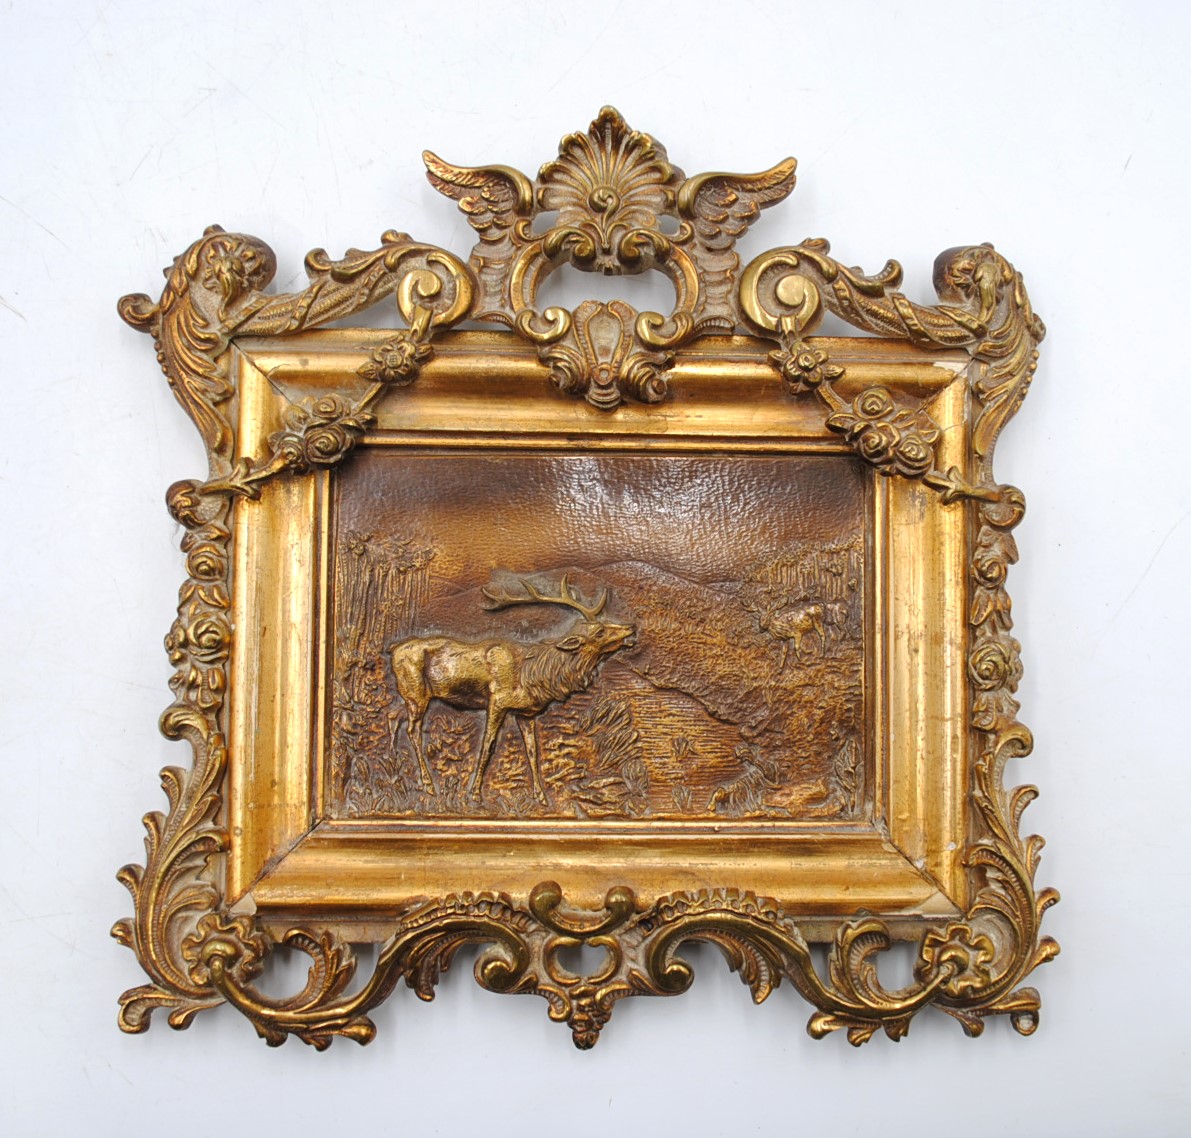 A framed bronze plaque of deer by a river - 25cm x 25cm